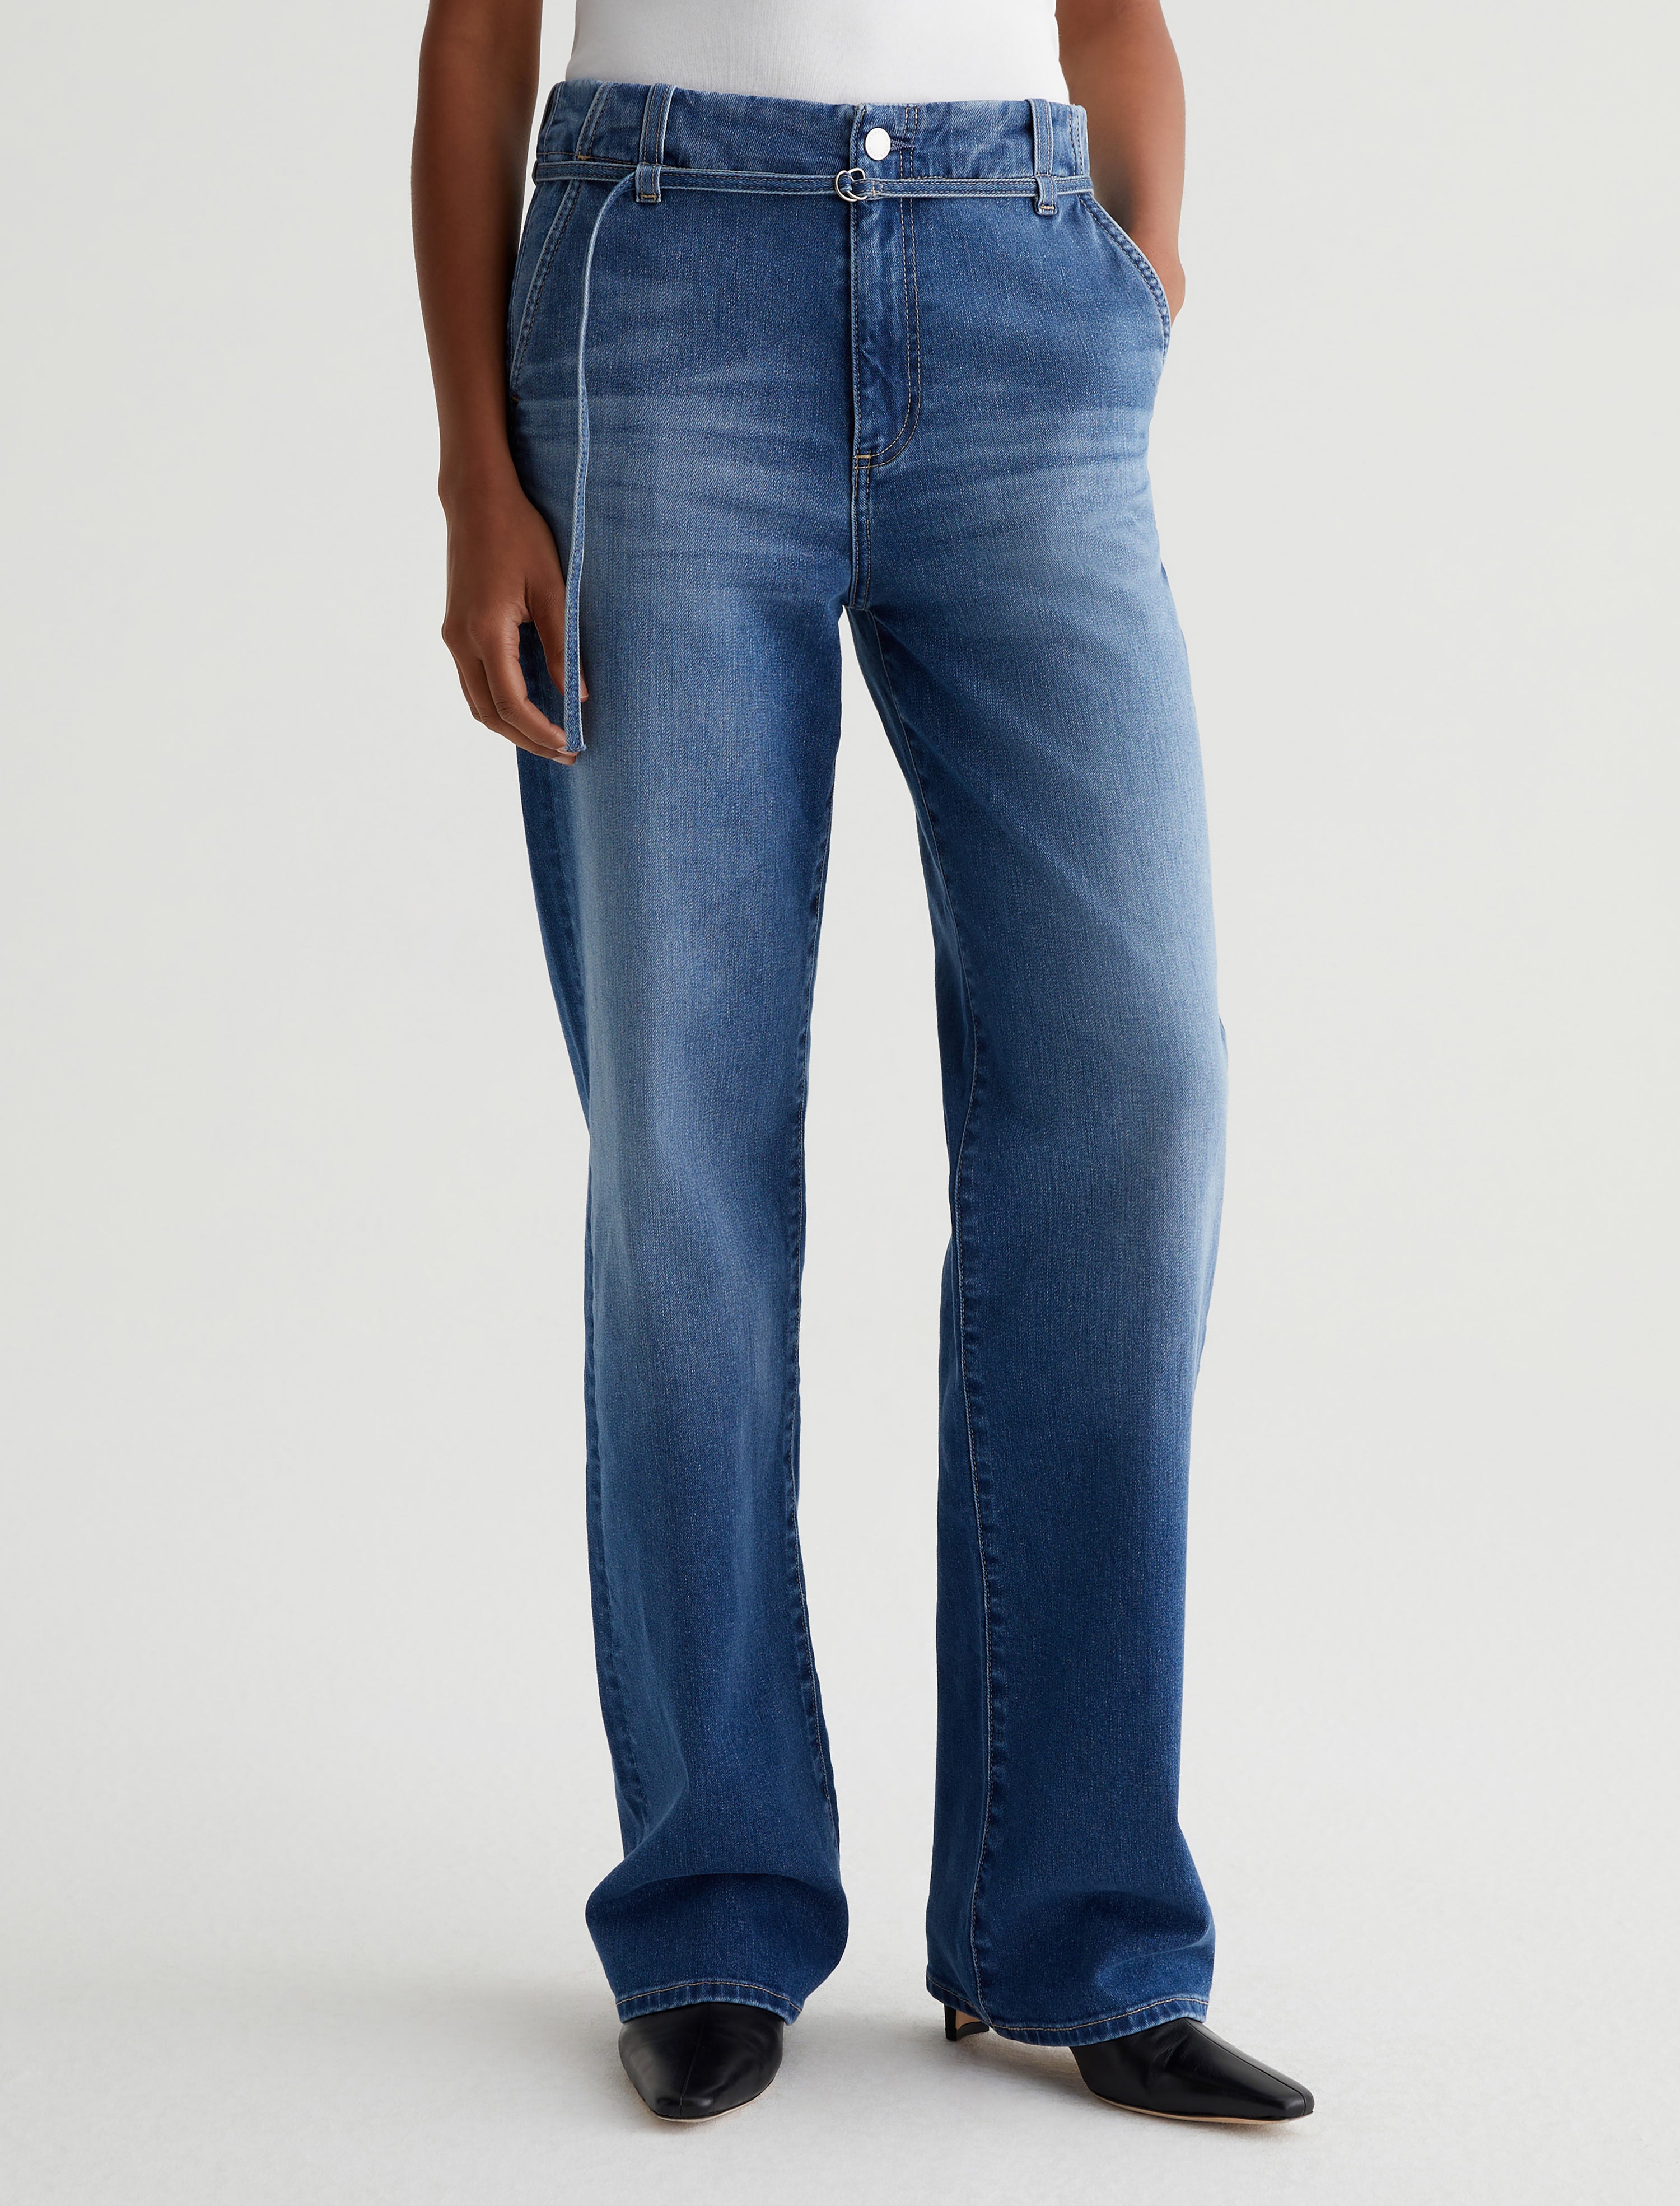 Soft Surroundings Ultimate Denim Pull On Jeans Womens Size Medium 10 12  Leaf | eBay